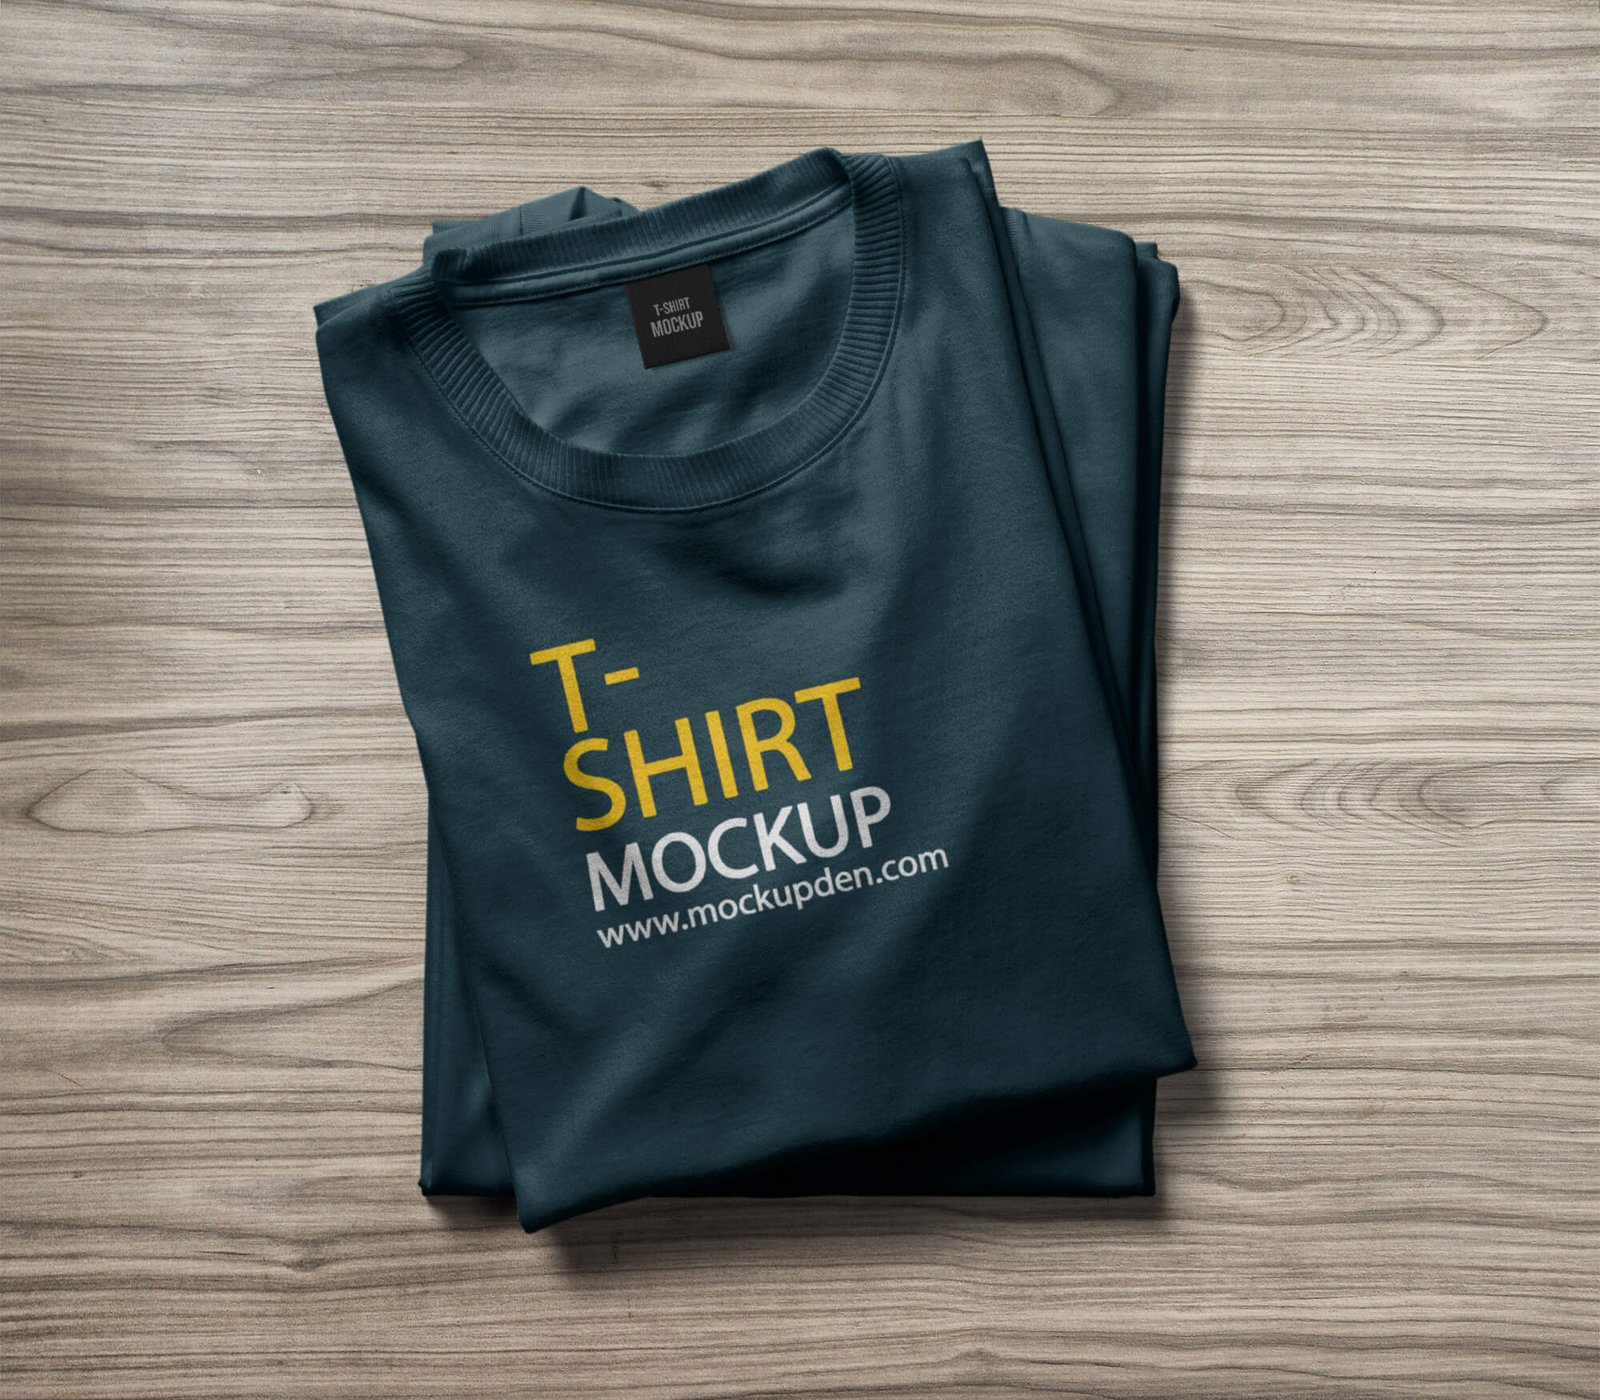 free-folded-t-shirt-mockup-vol-2-psd-template-mockup-den